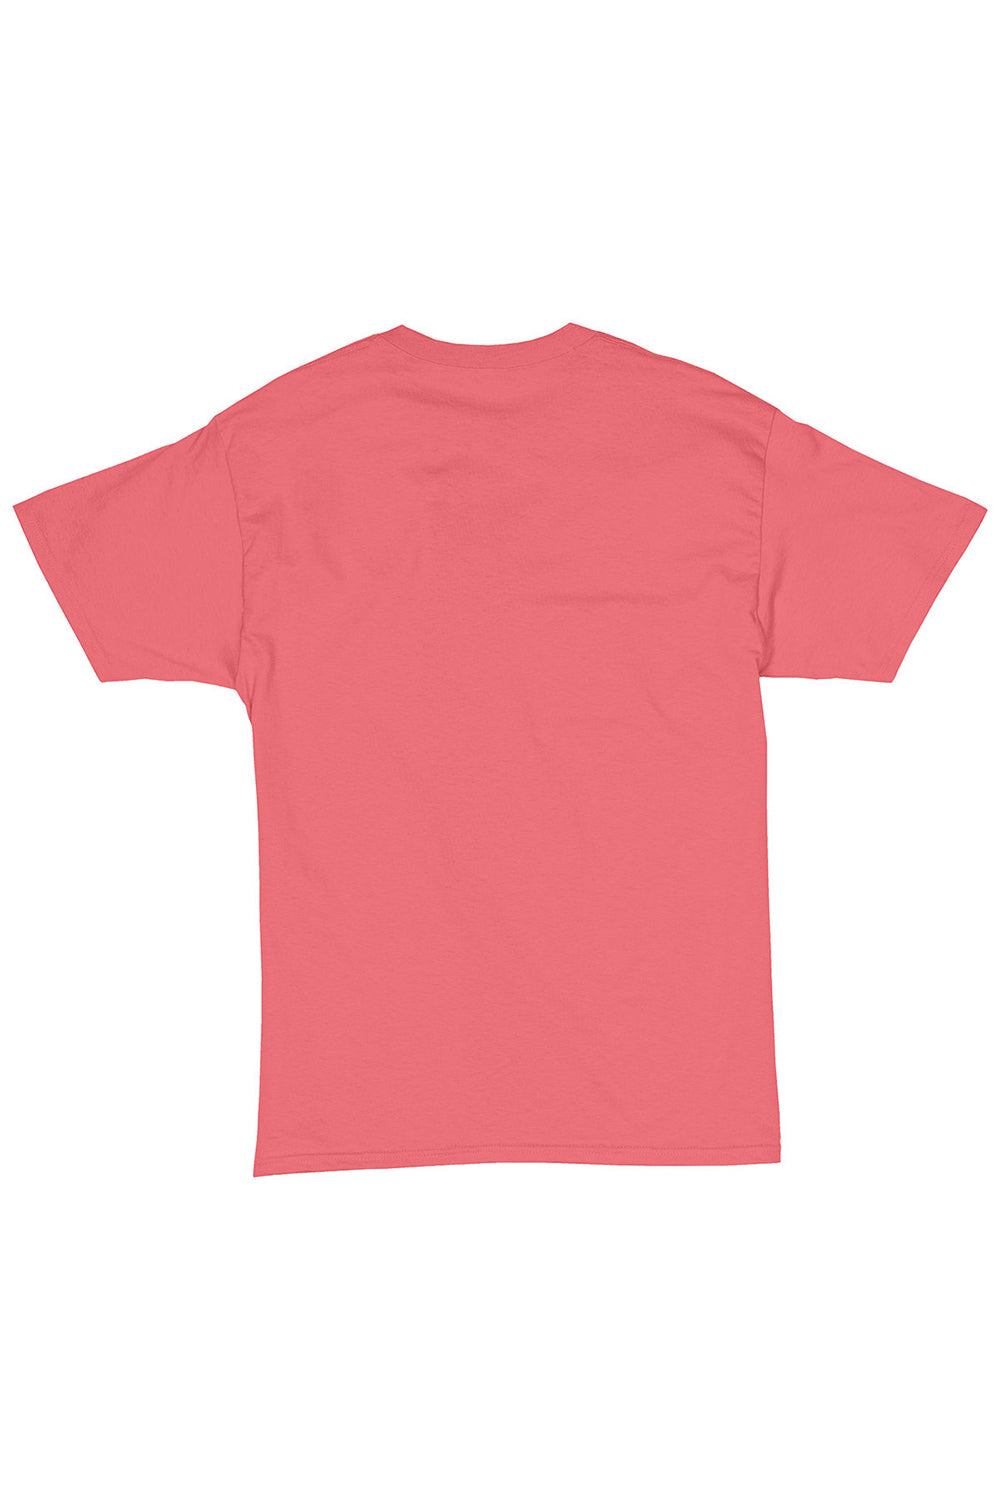 Hanes 5280 Mens ComfortSoft Short Sleeve Crewneck T-Shirt Charisma Coral Flat Back